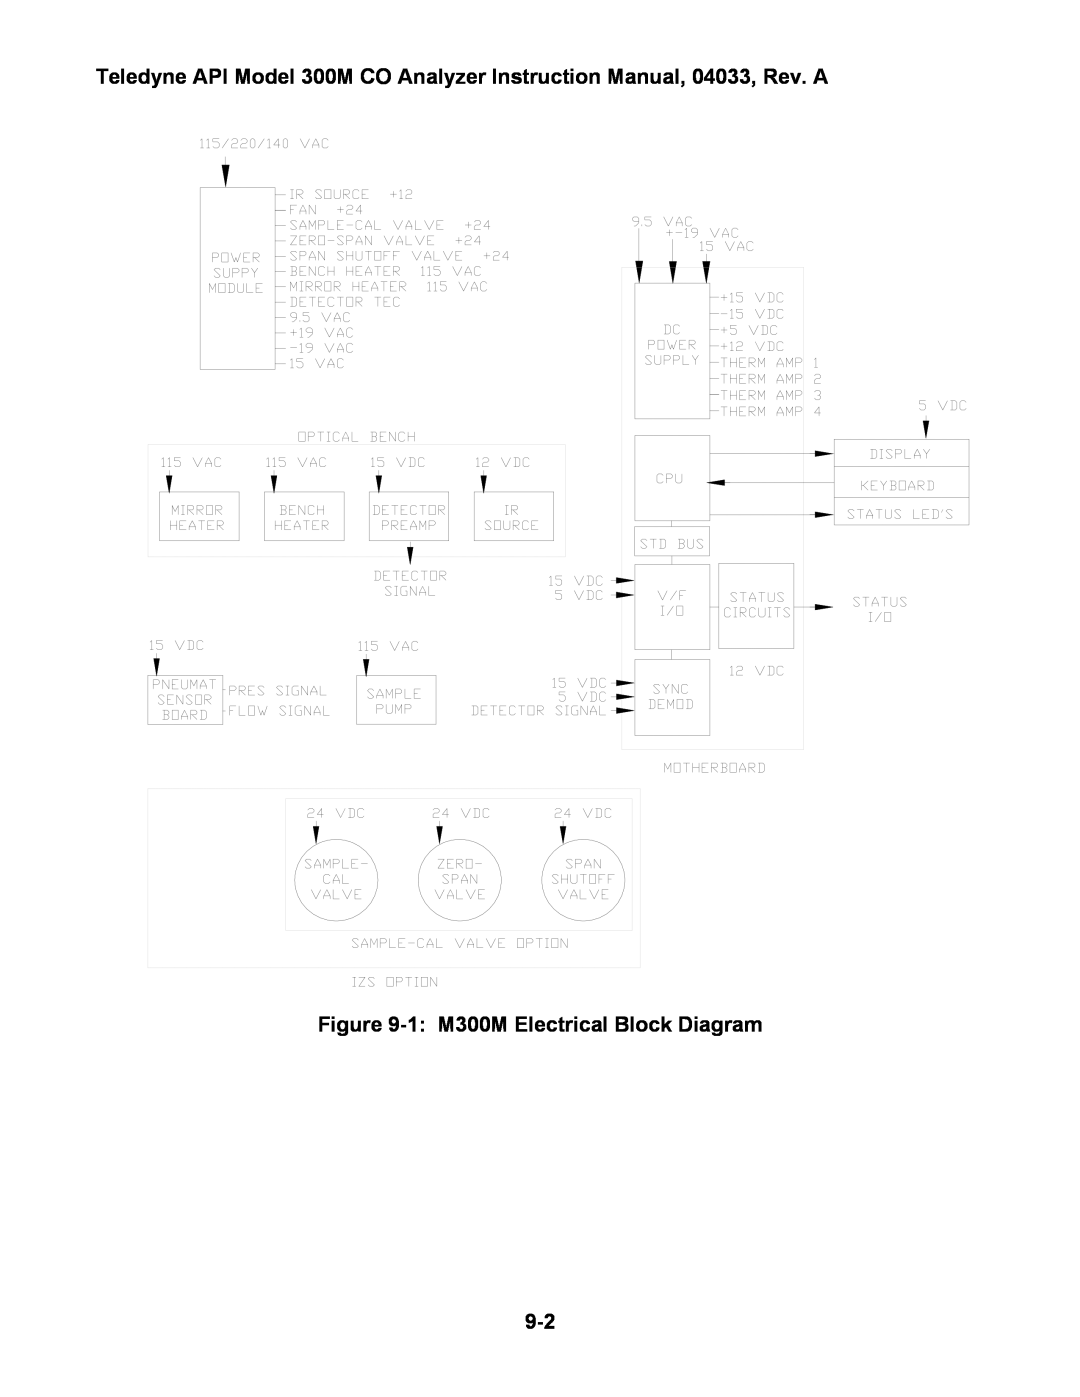 Teledyne instruction manual 1:M300M Electrical Block Diagram 